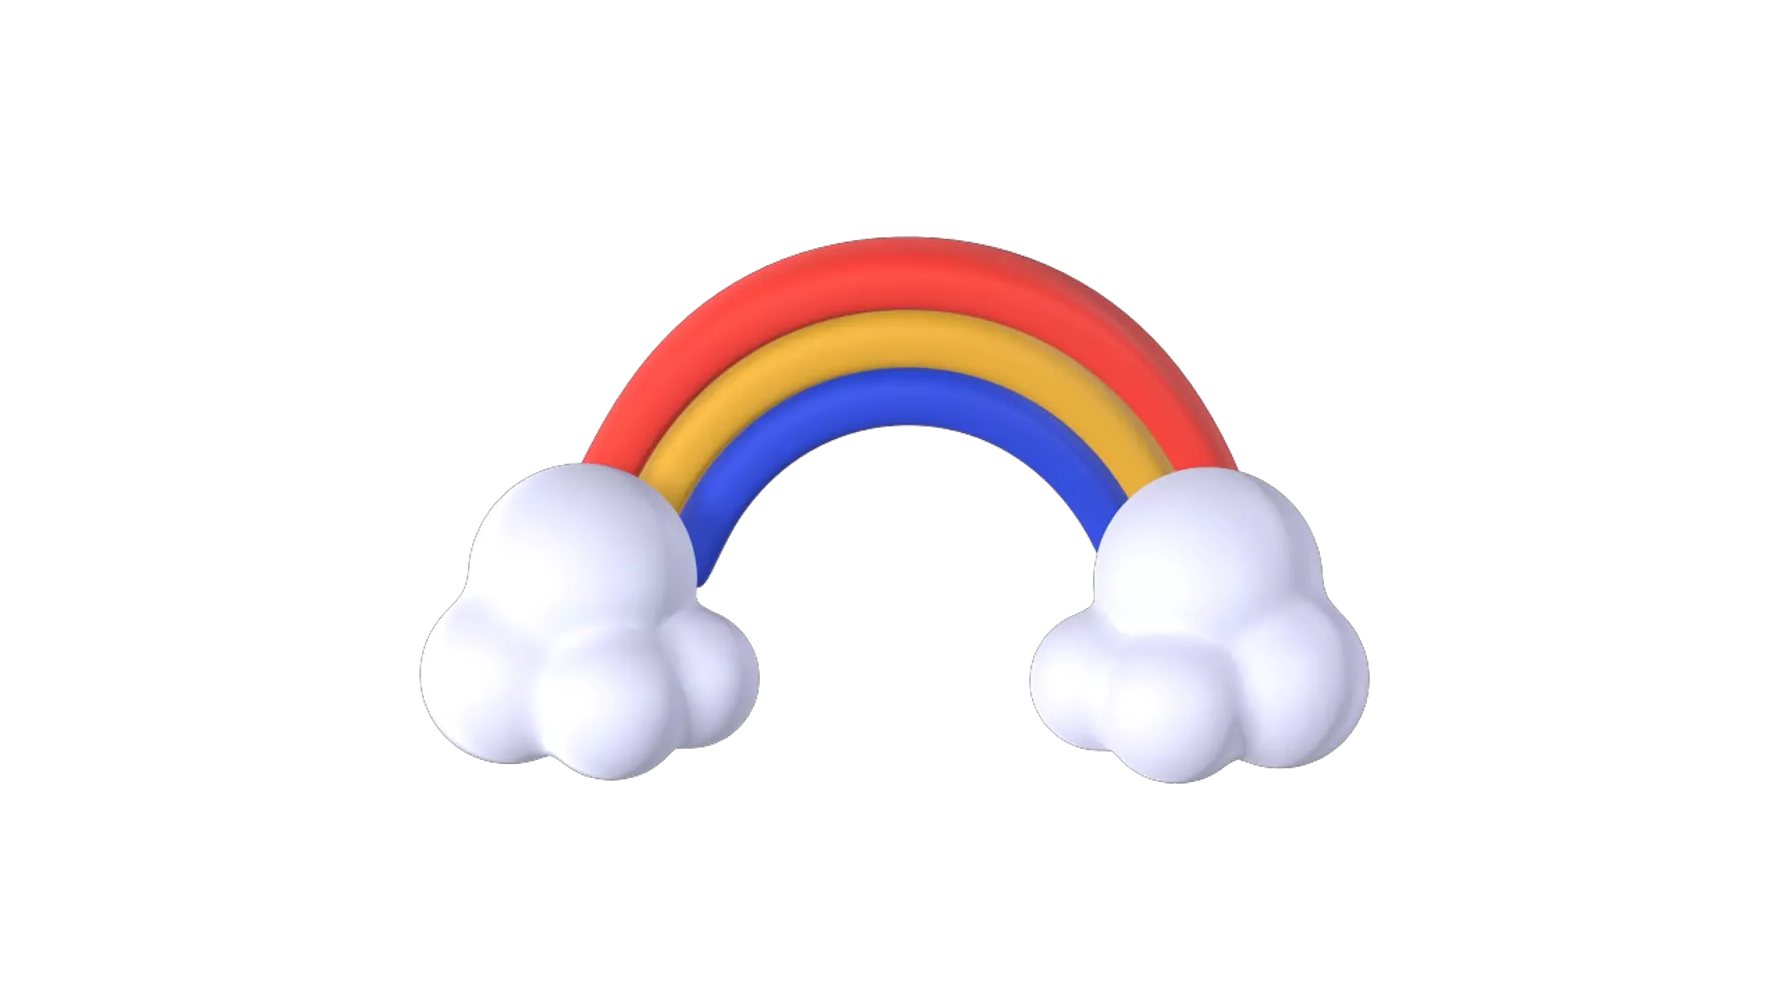 Rainbow 3D Graphic